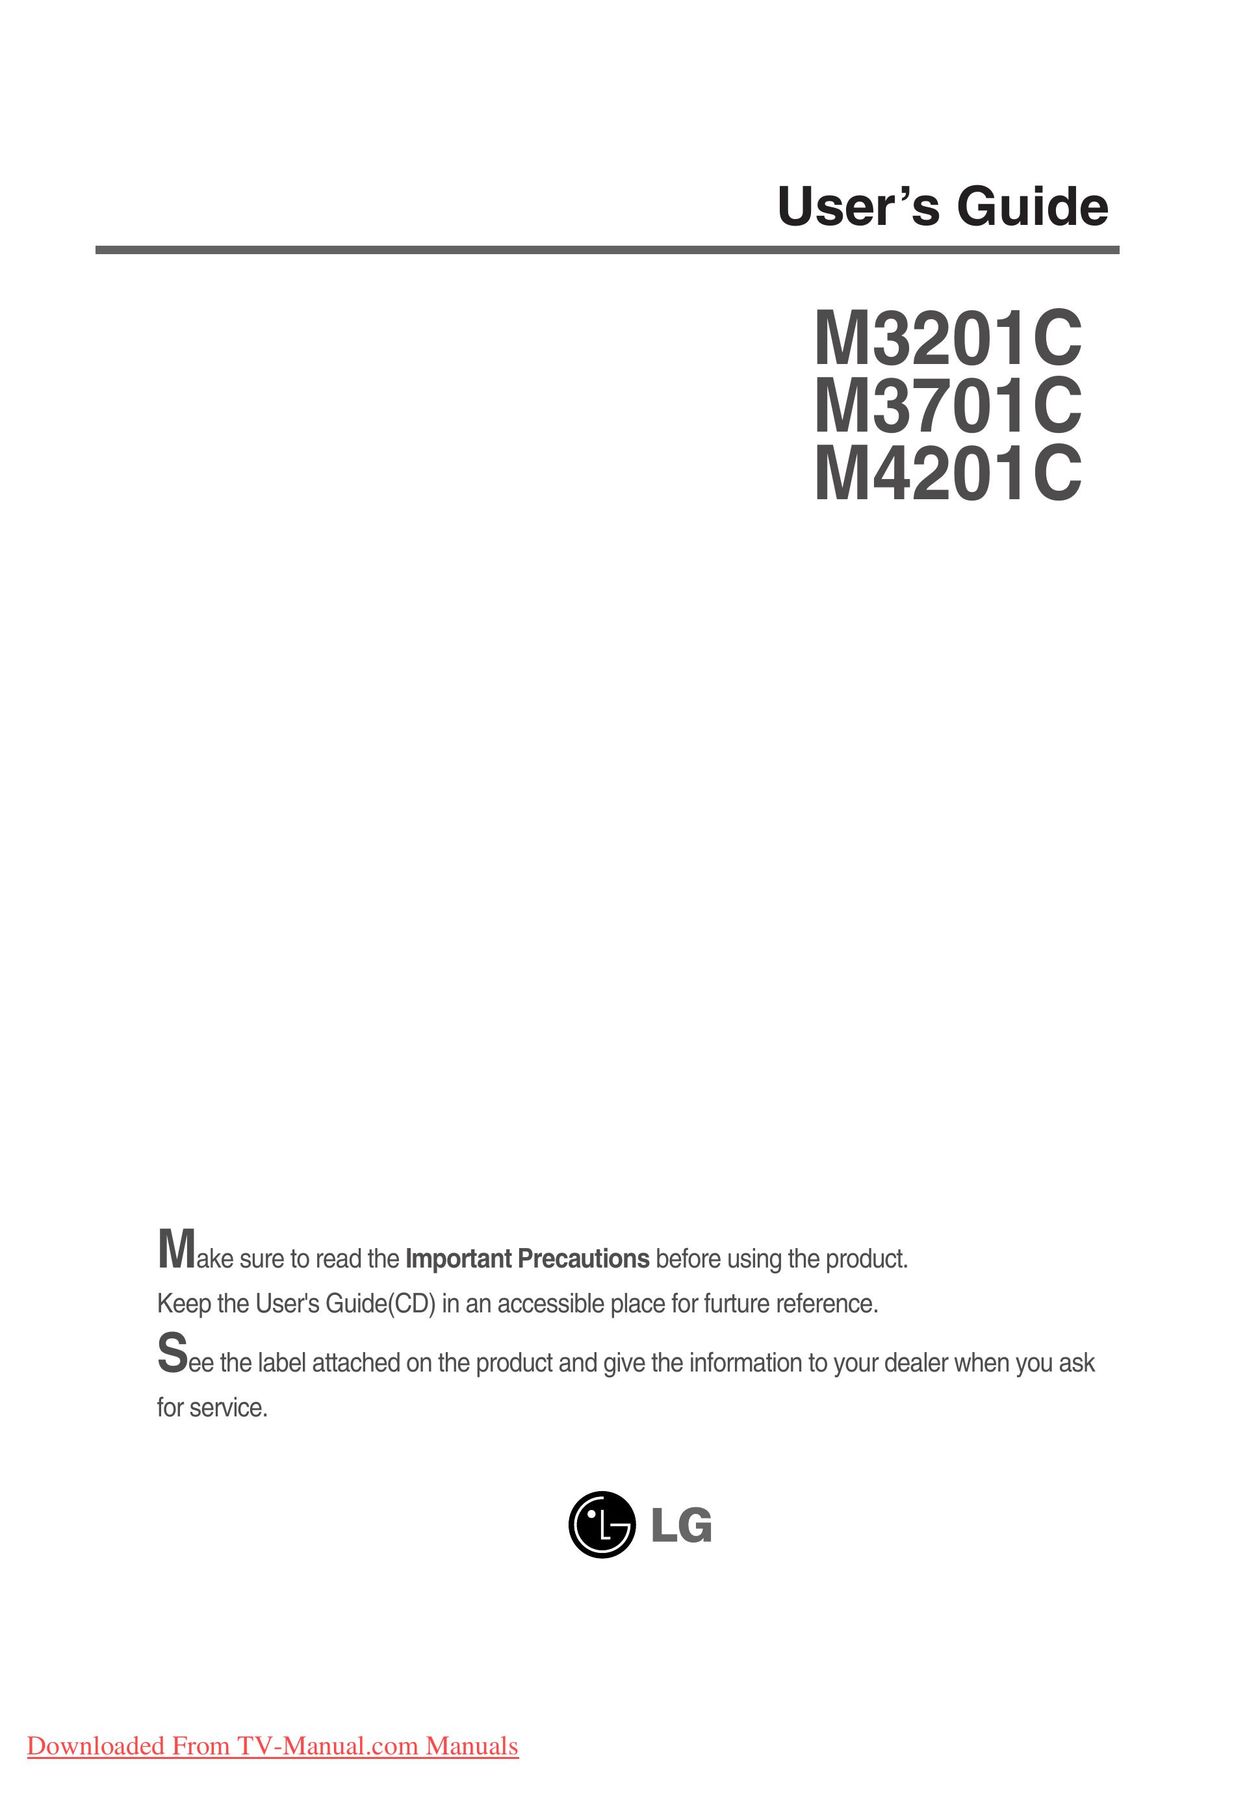 LG Electronics M3201C Model Vehicle User Manual (Page 1)